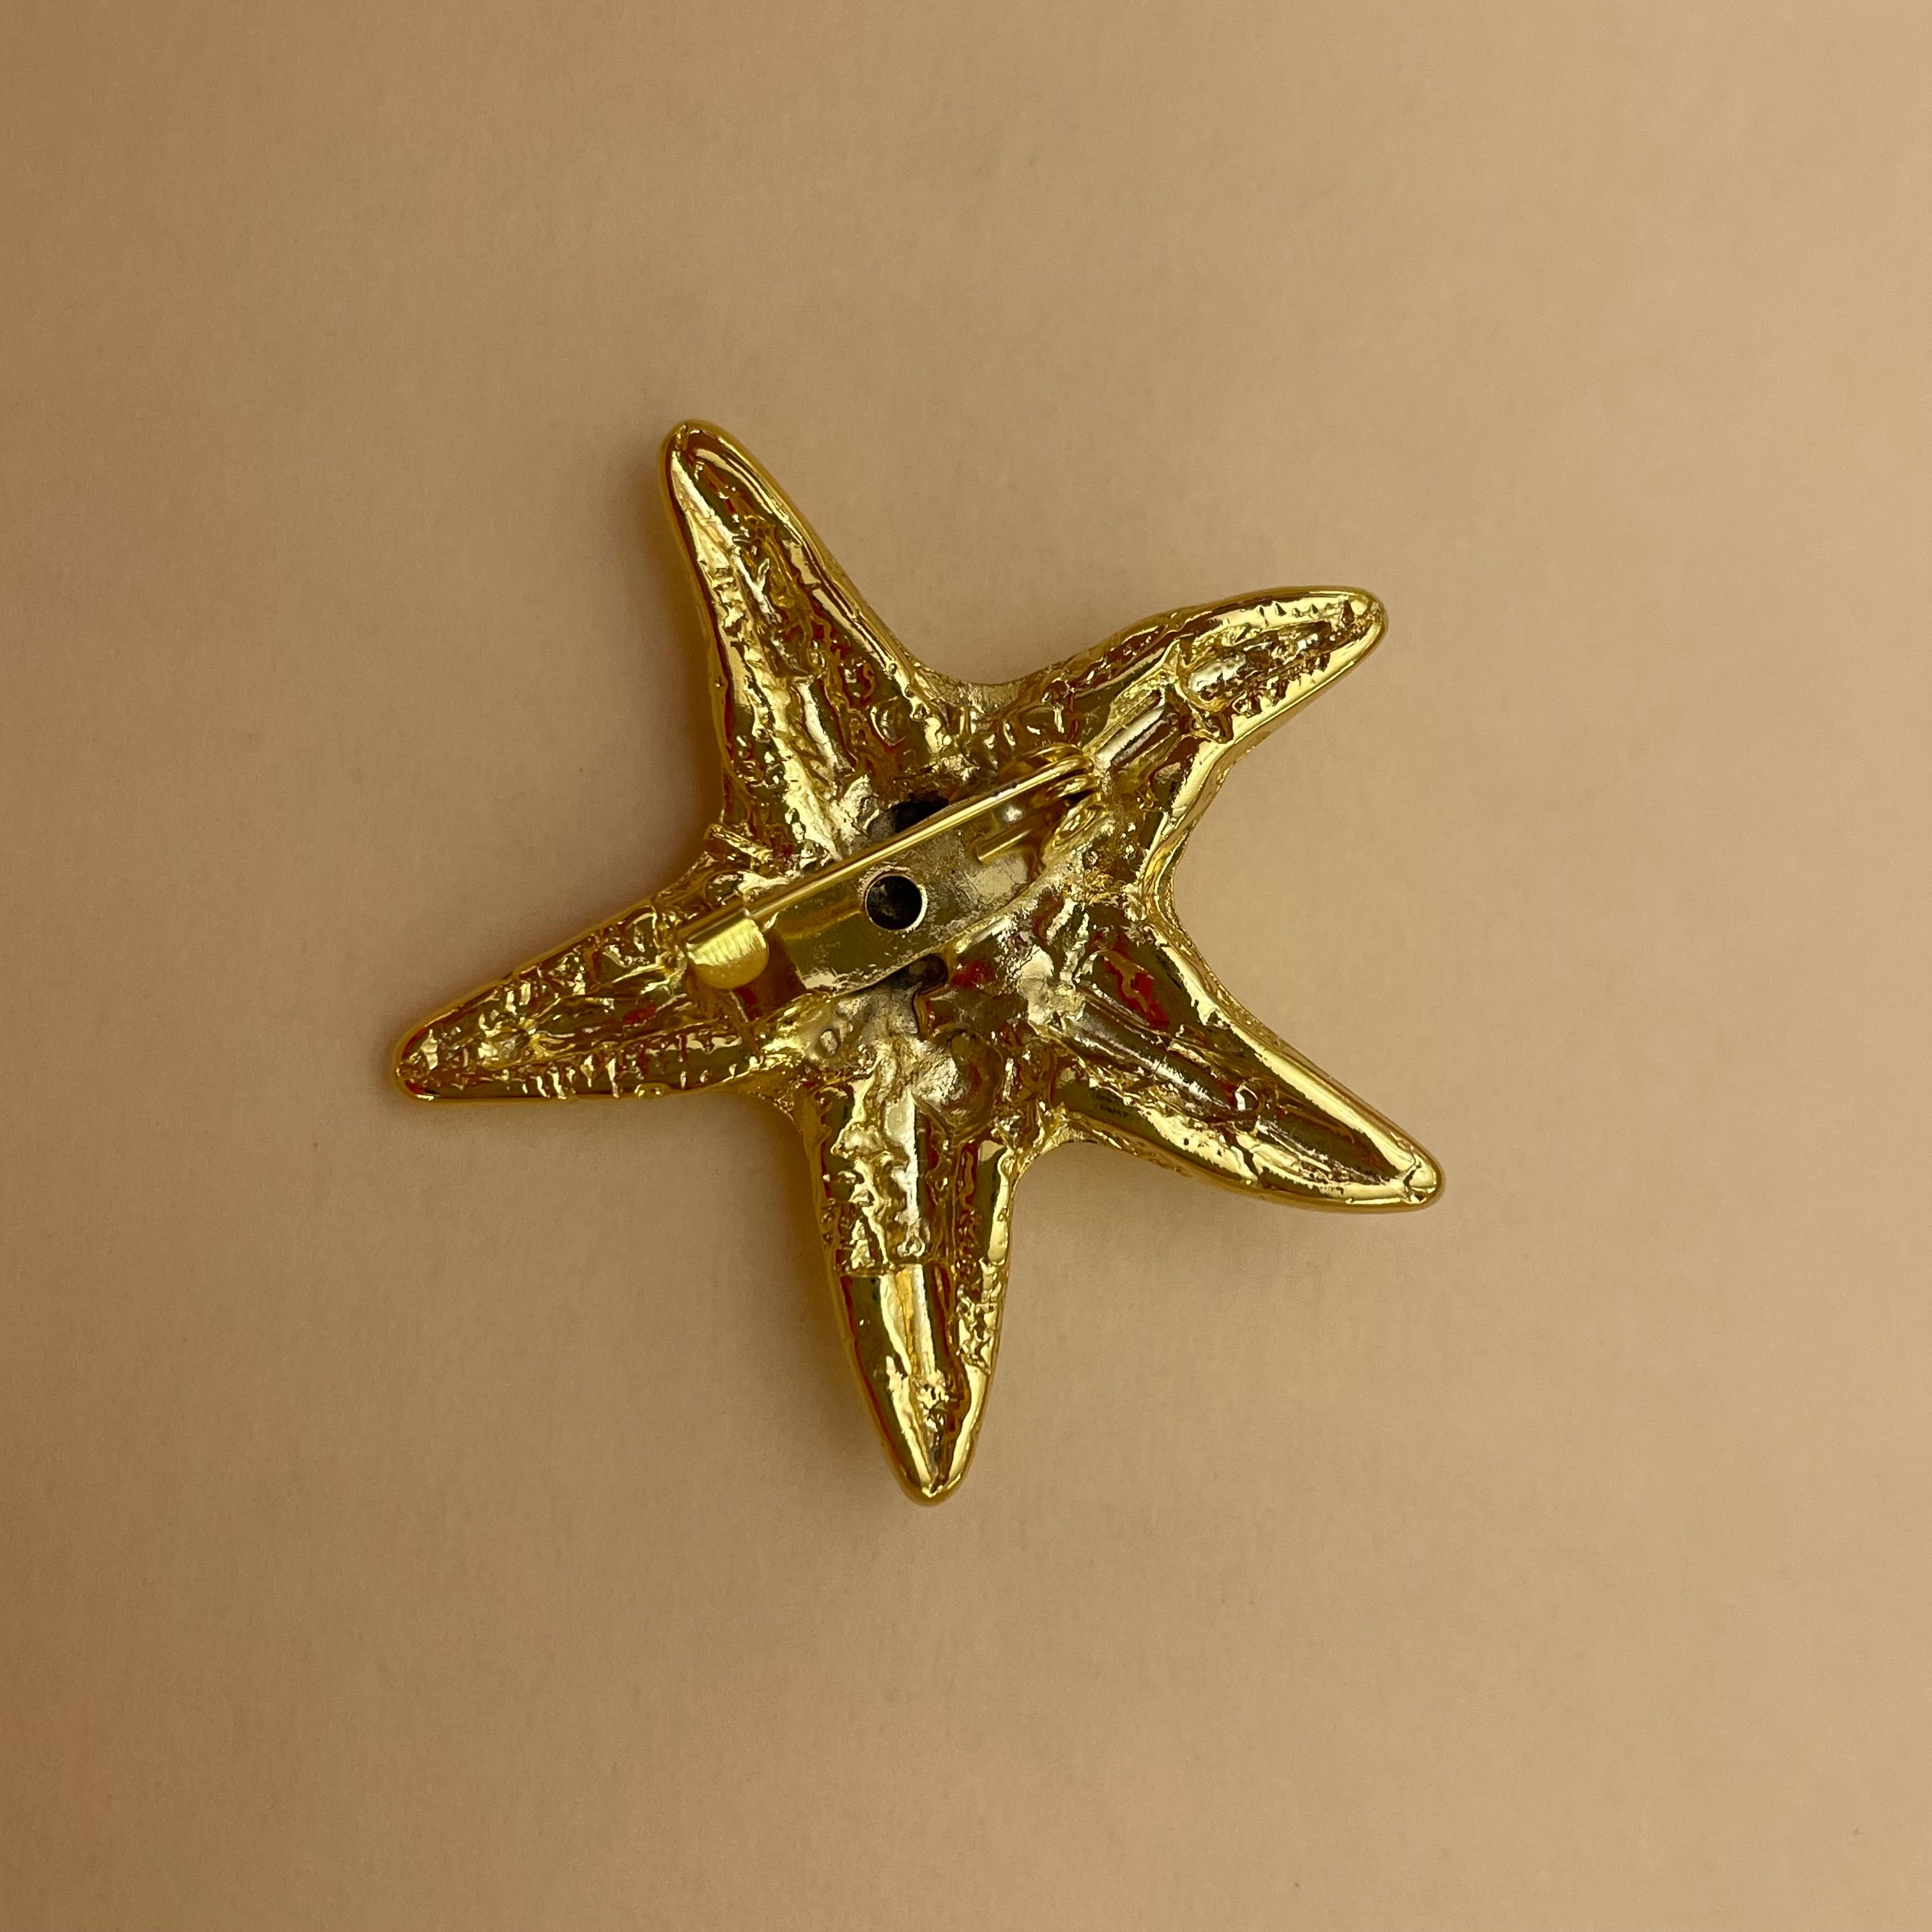 Starfish brooch